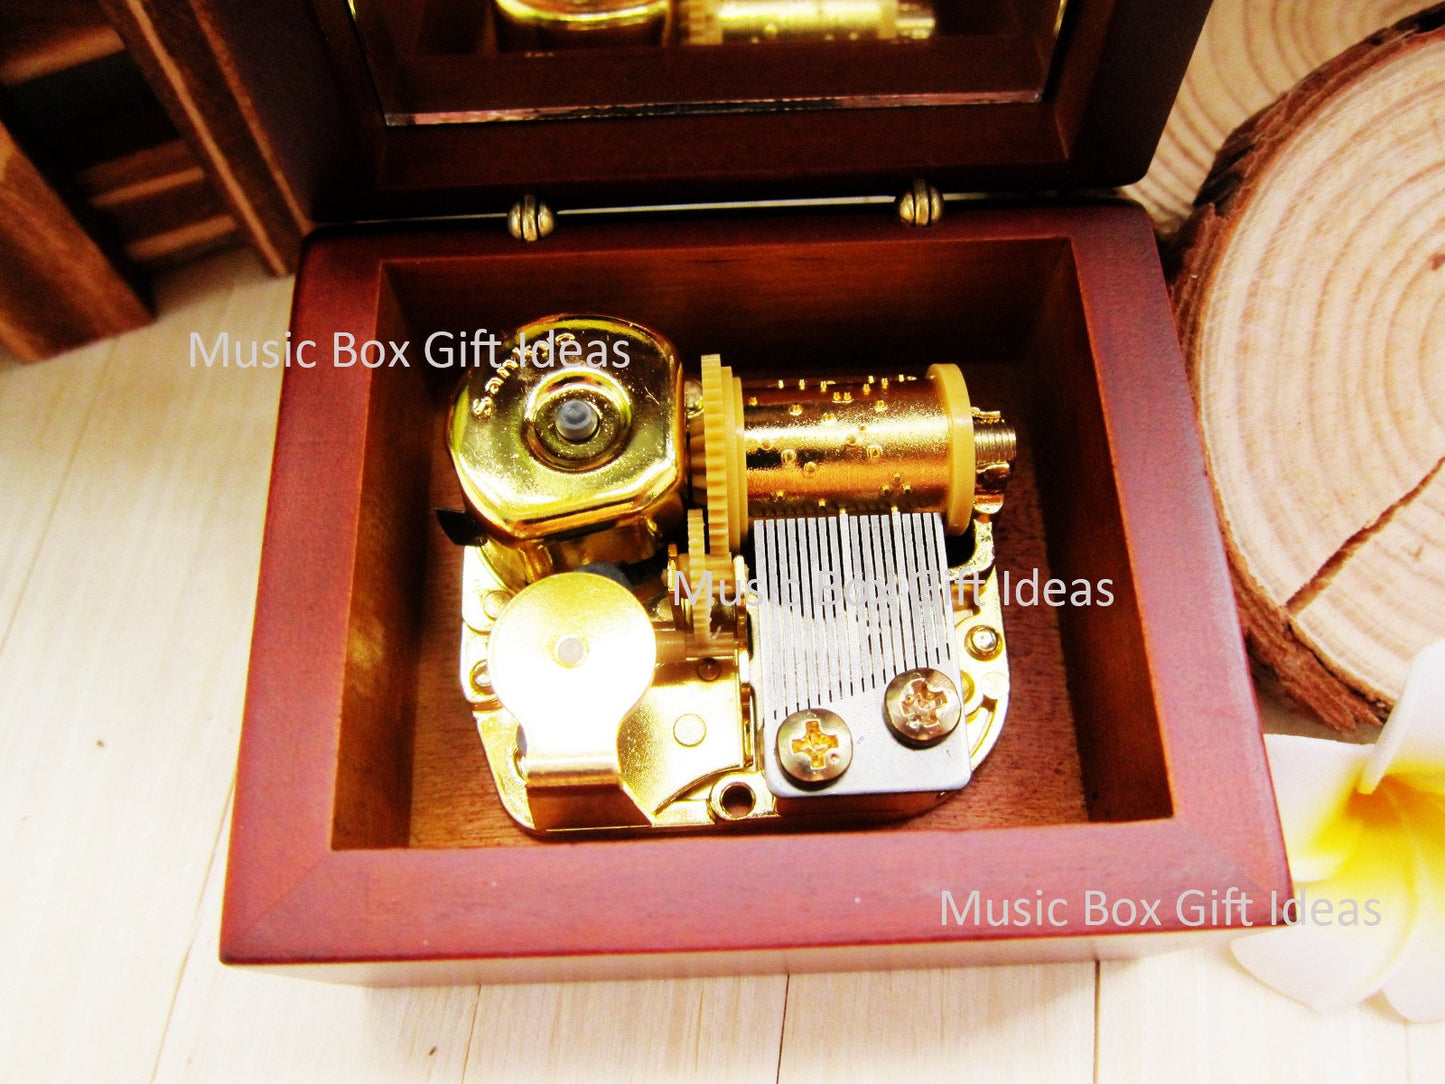 Musical The Phantom of the Opera Angel of Music 18-Note Music Box Gift (Wooden Clockwork) - Music Box Gift Ideas